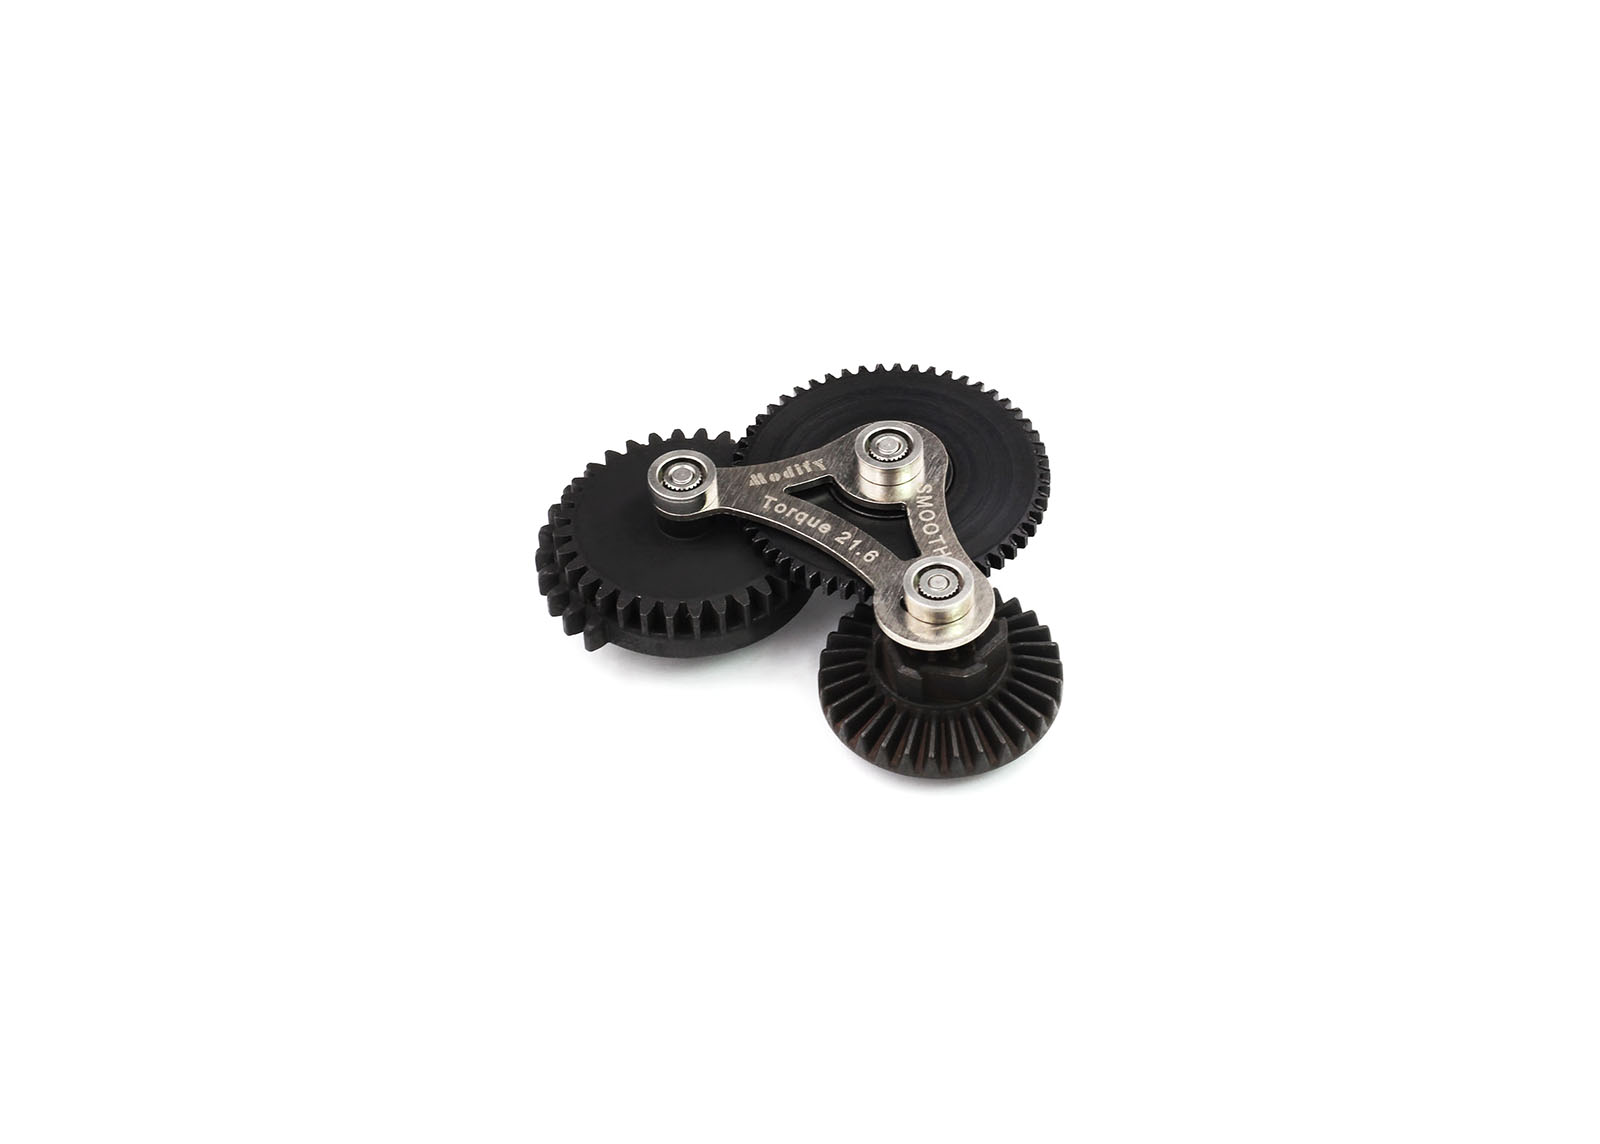 Modular Gear Set - SMOOTH 7mm Ver.2/Ver.3 (Torque 21.6:1+Gear Key) - Modify Airsoft parts